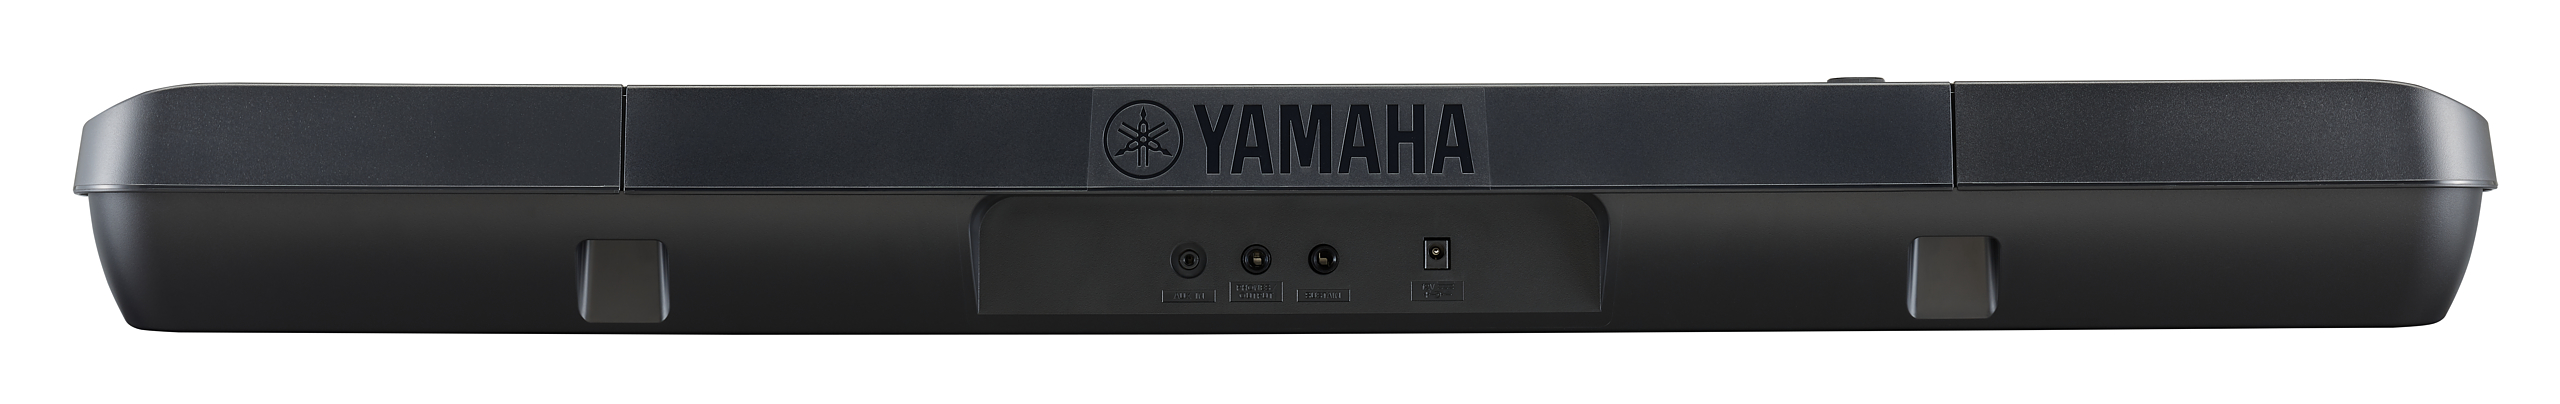 Yamaha Psr E273 - Entertainer Keyboard - Variation 3